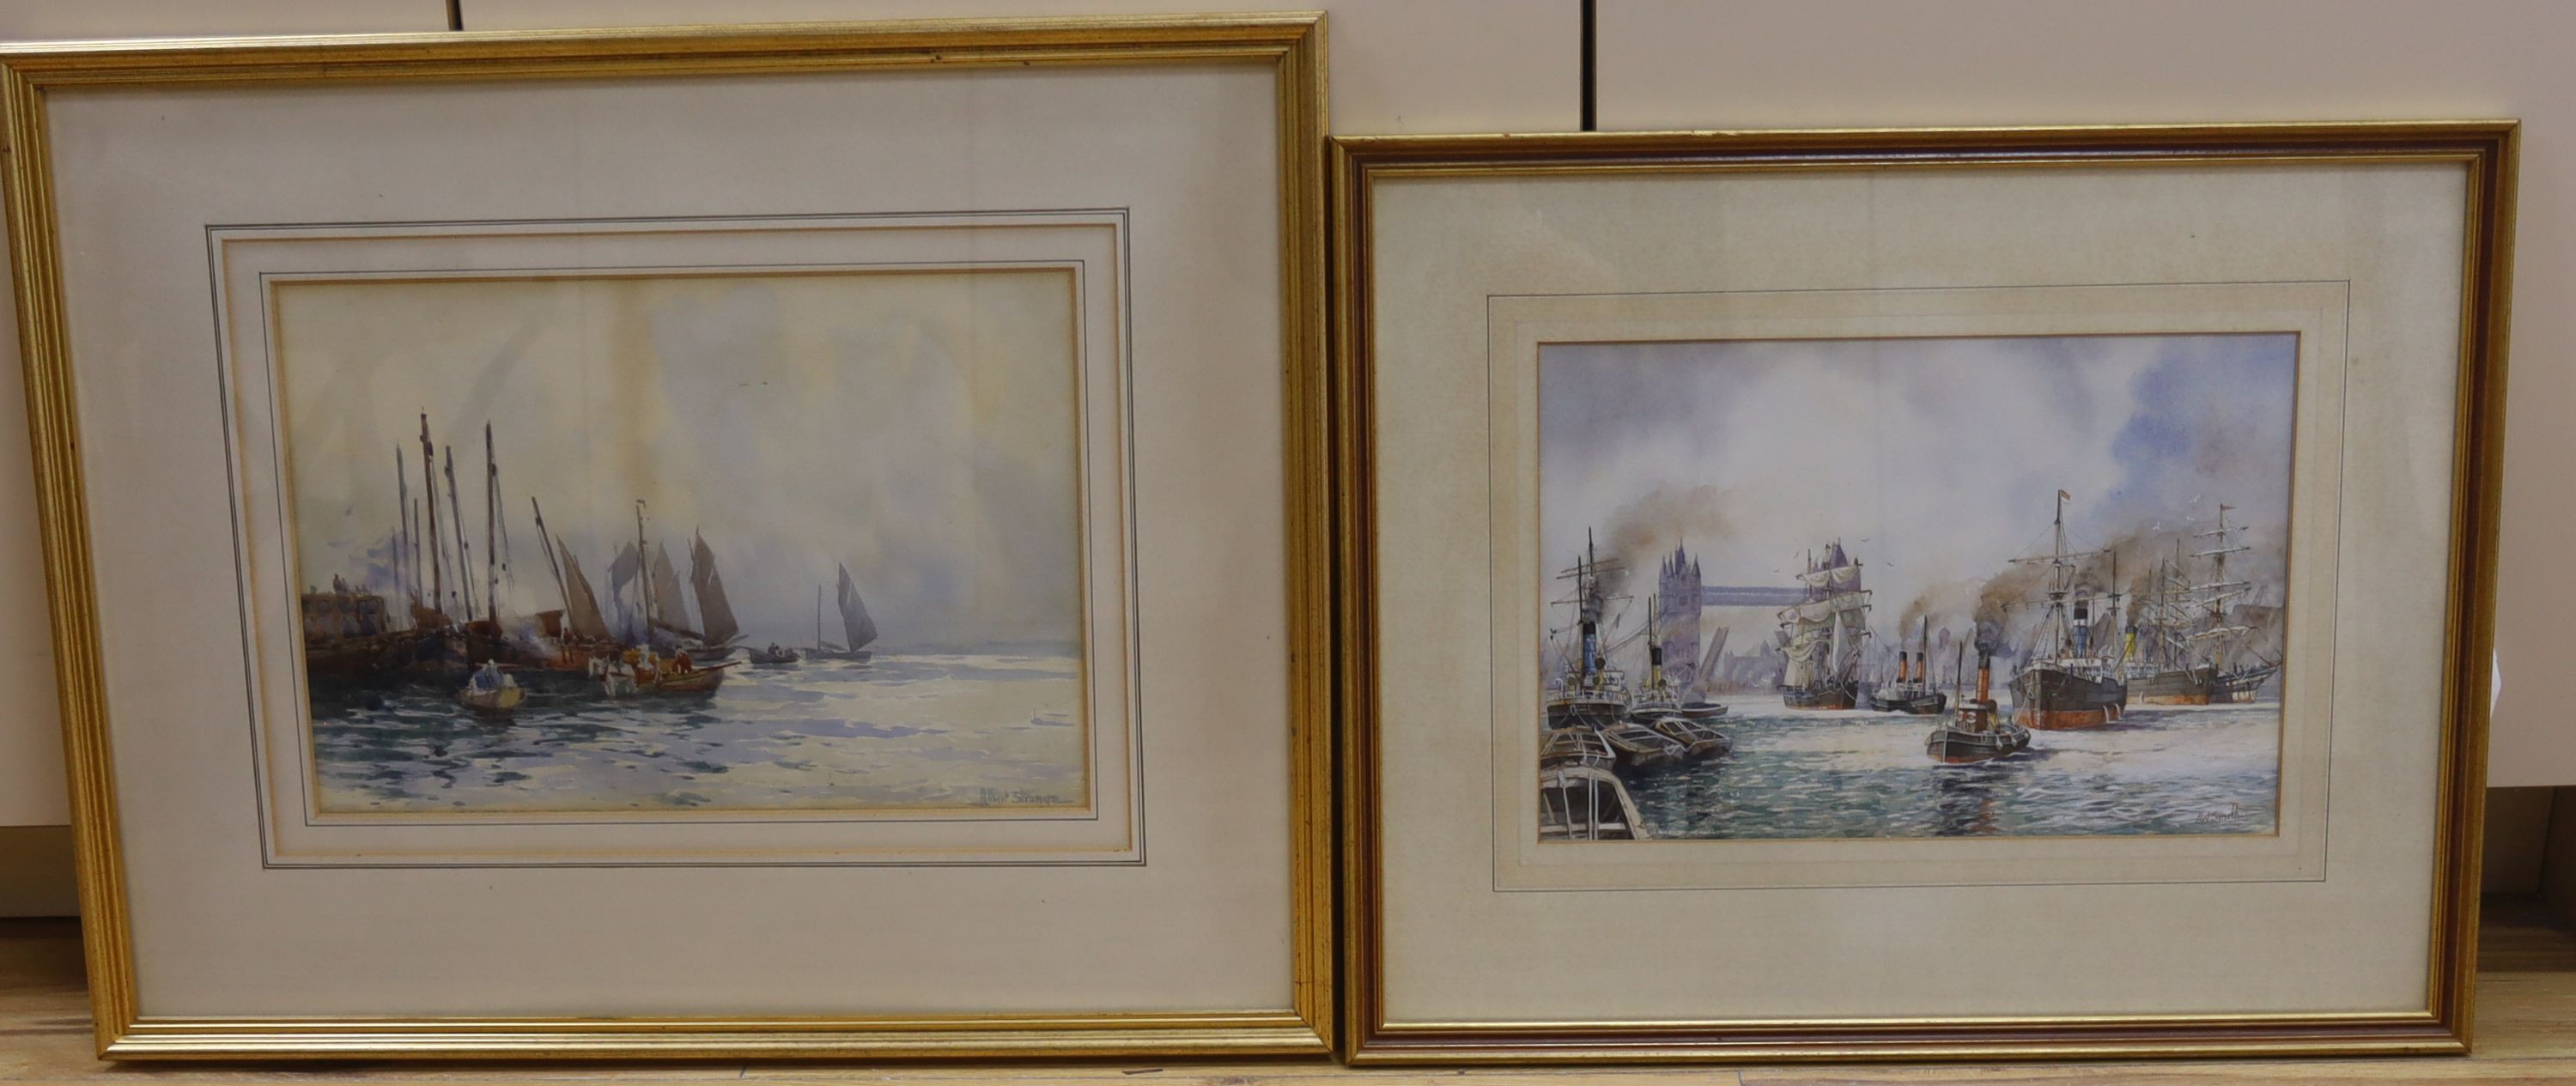 Albert Smith (b.1941), watercolour, Tower Bridge, 23 x 34cm and an Albert Strange watercolour of Fishing boats, 25 x 36cm